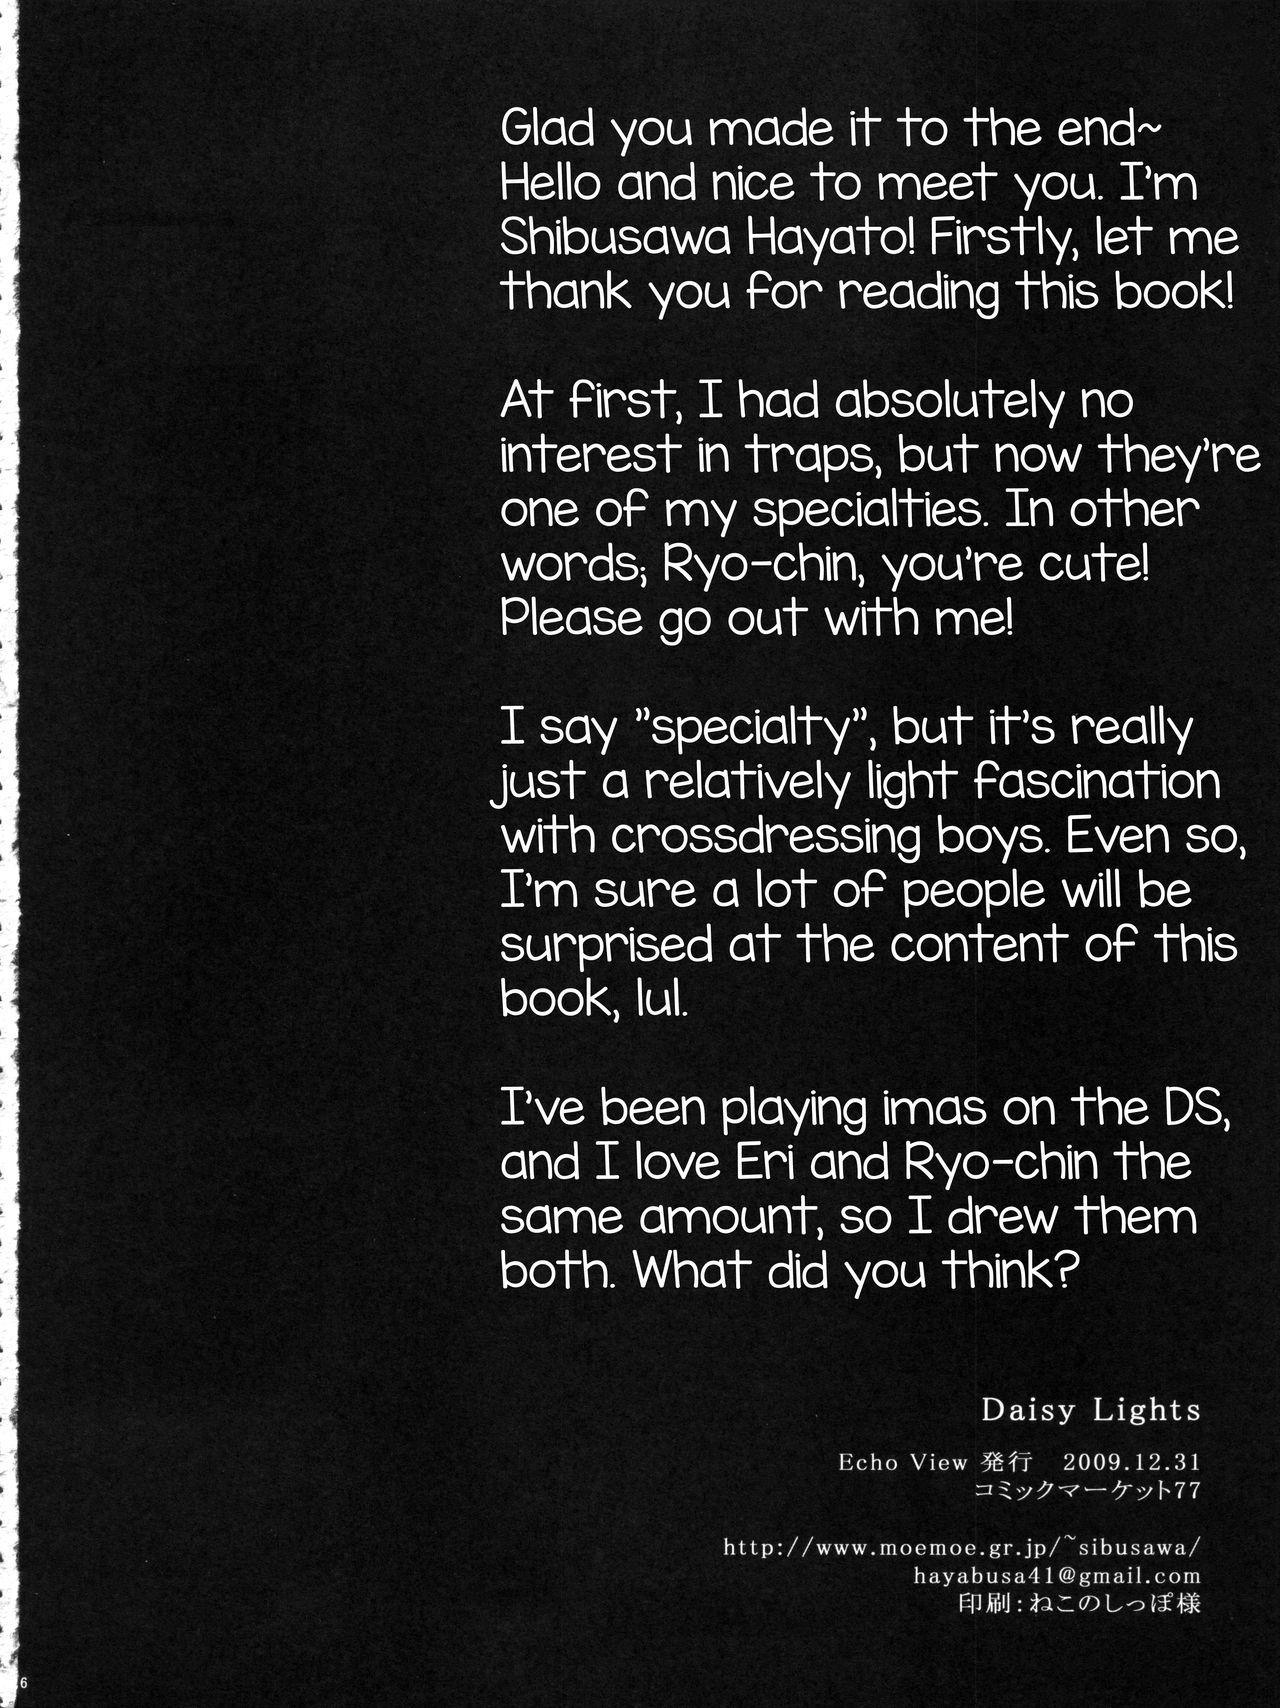 Daisy Lights 25